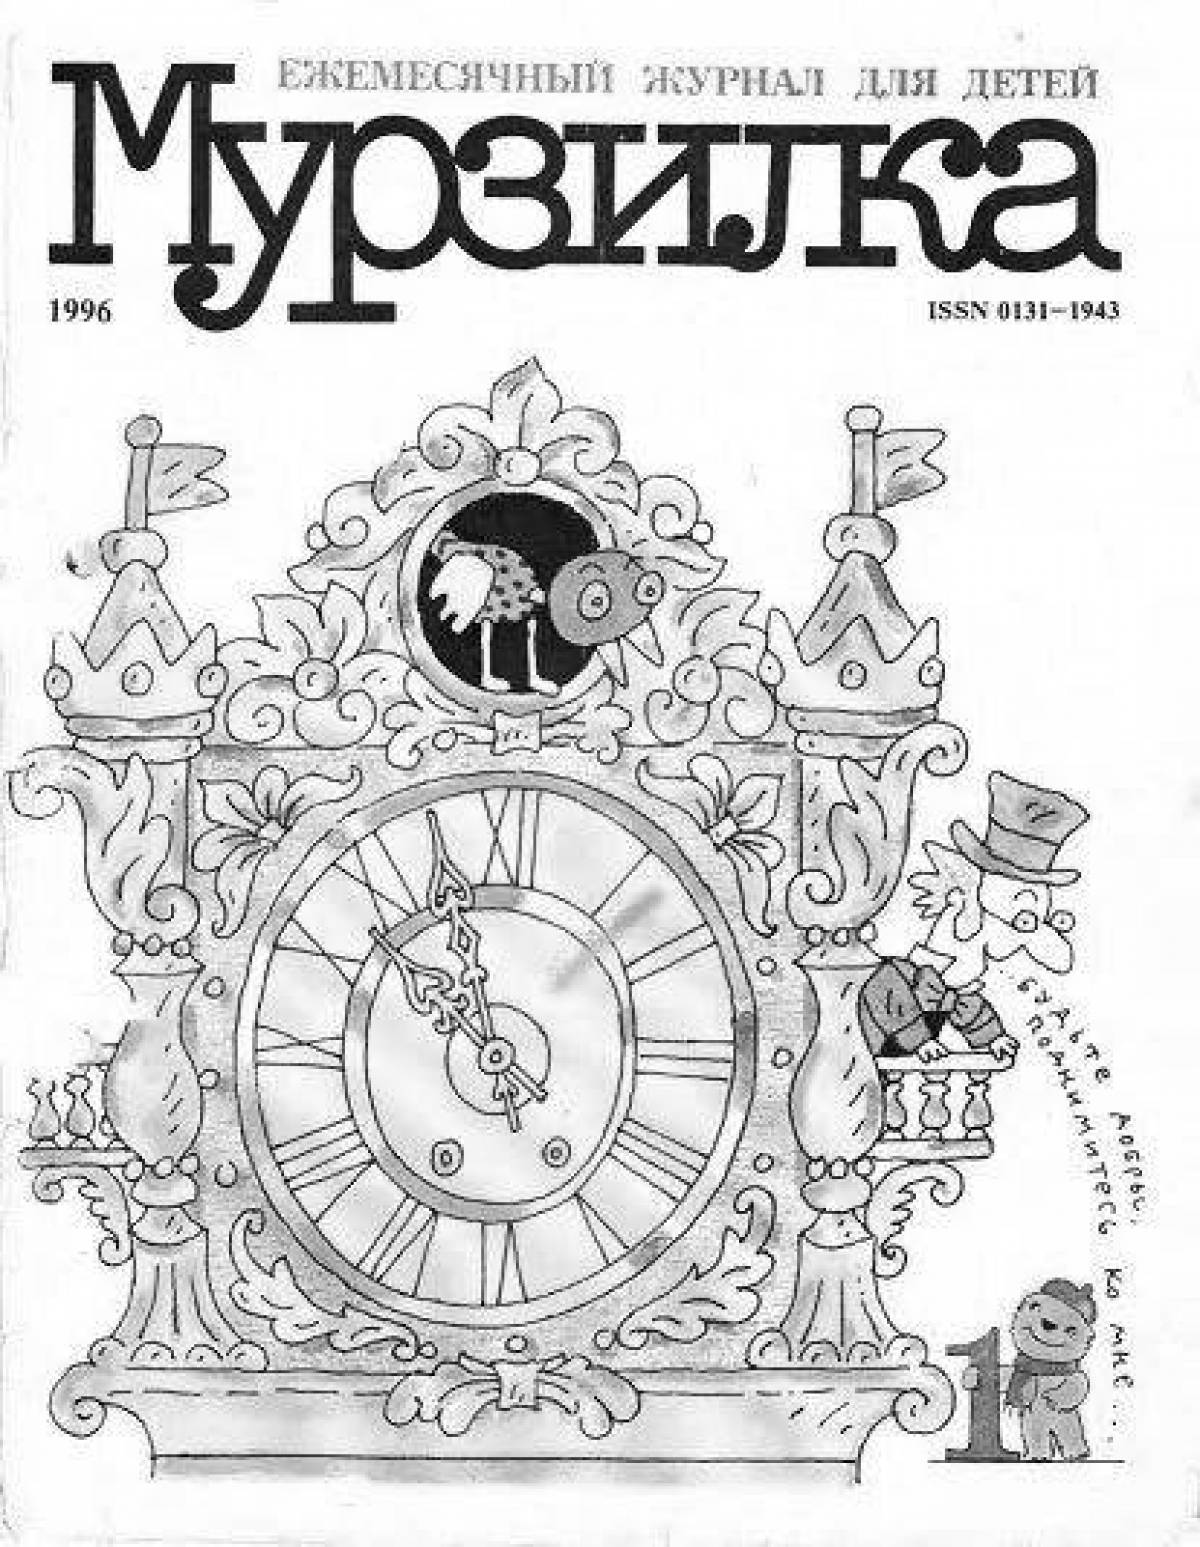 Журнал «Мурзилка» включен в Книгу рекордов Гиннесса